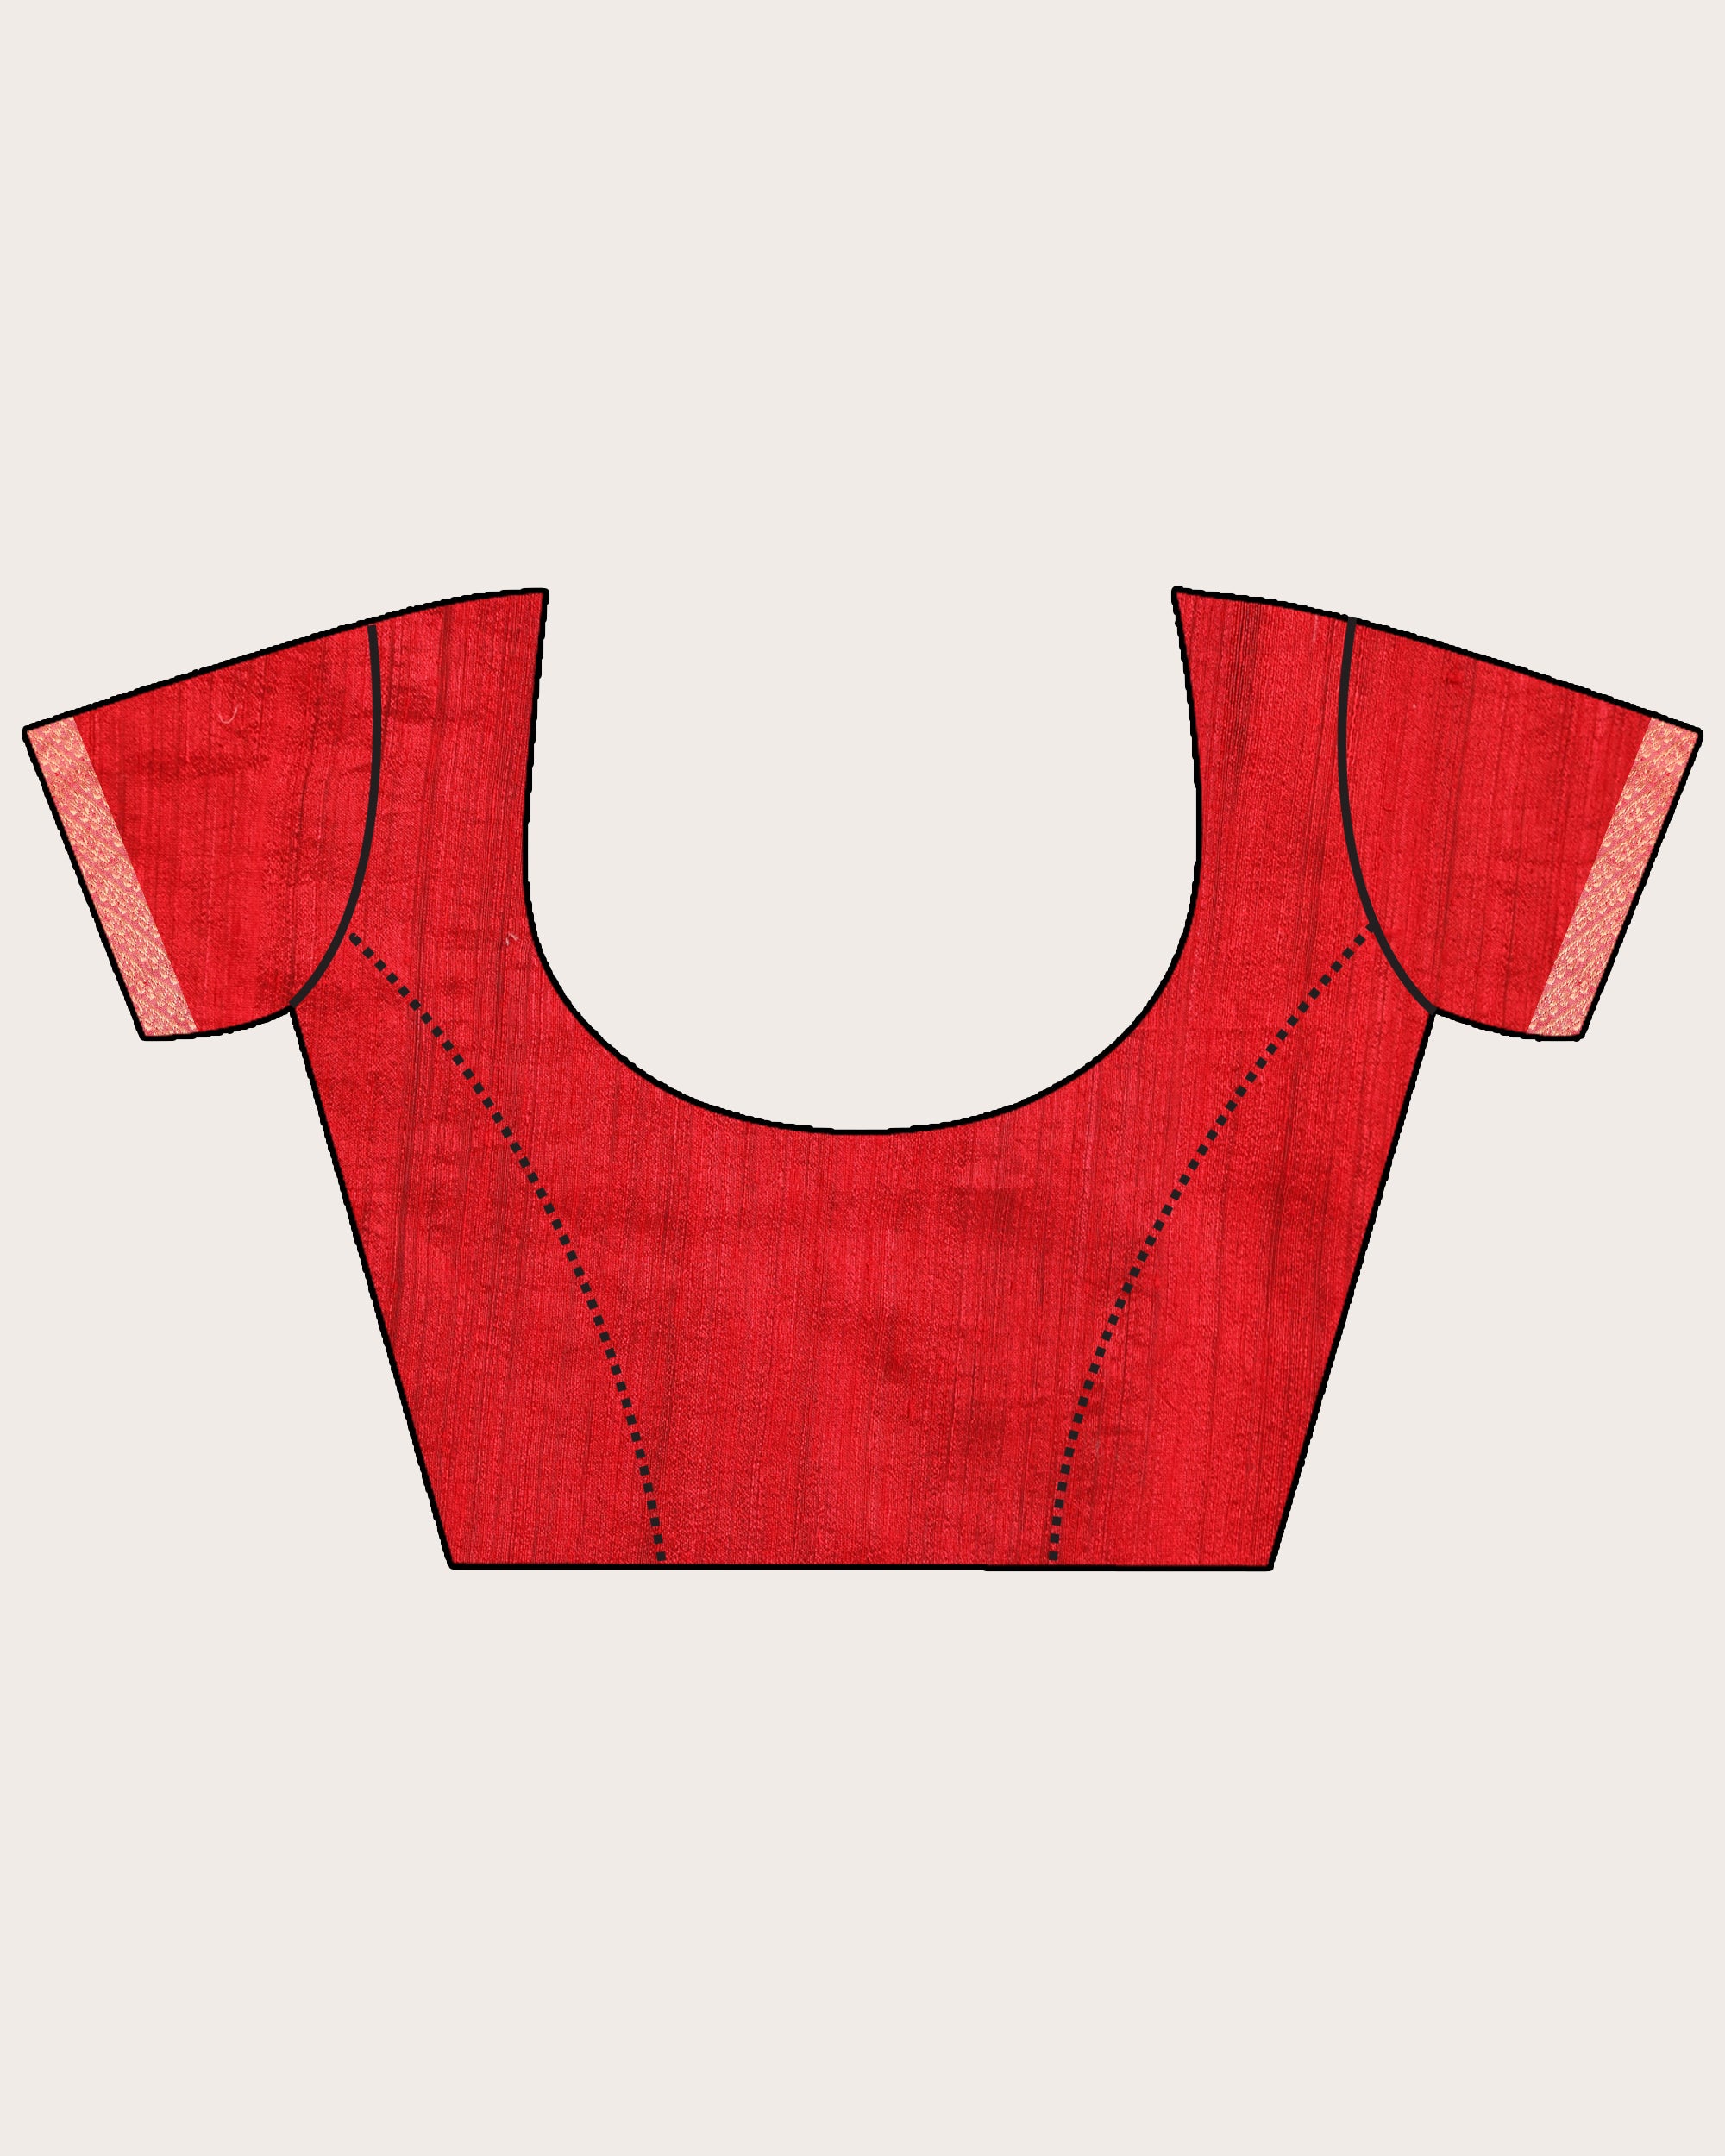 Women's Red Handloom Traditional Tangail Matka Silk Saree - Angoshobha